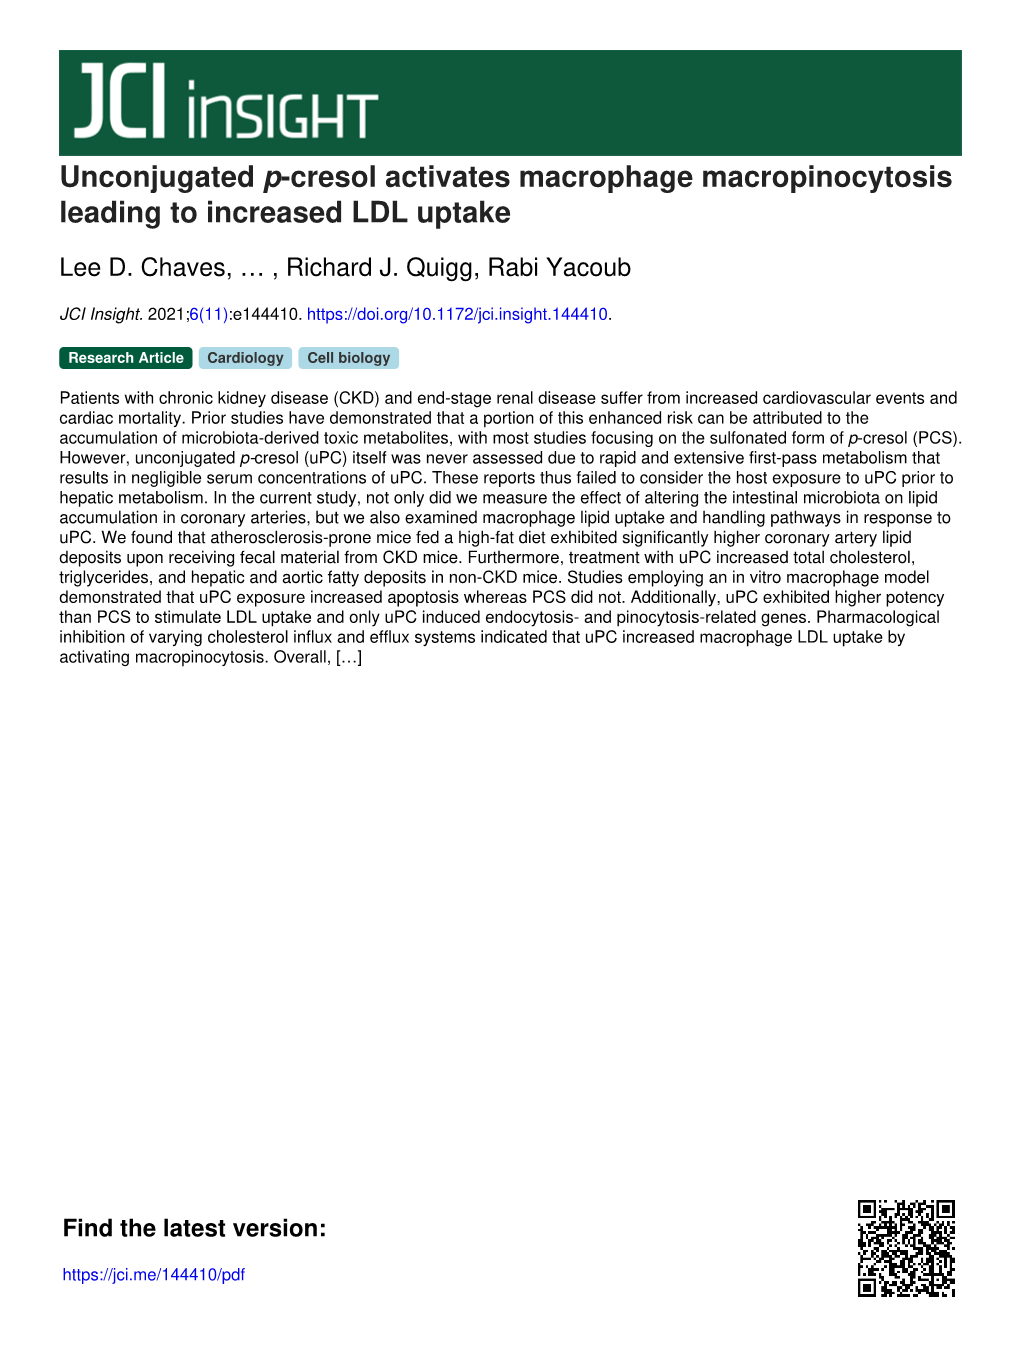 Unconjugated P-Cresol Activates Macrophage Macropinocytosis Leading to Increased LDL Uptake